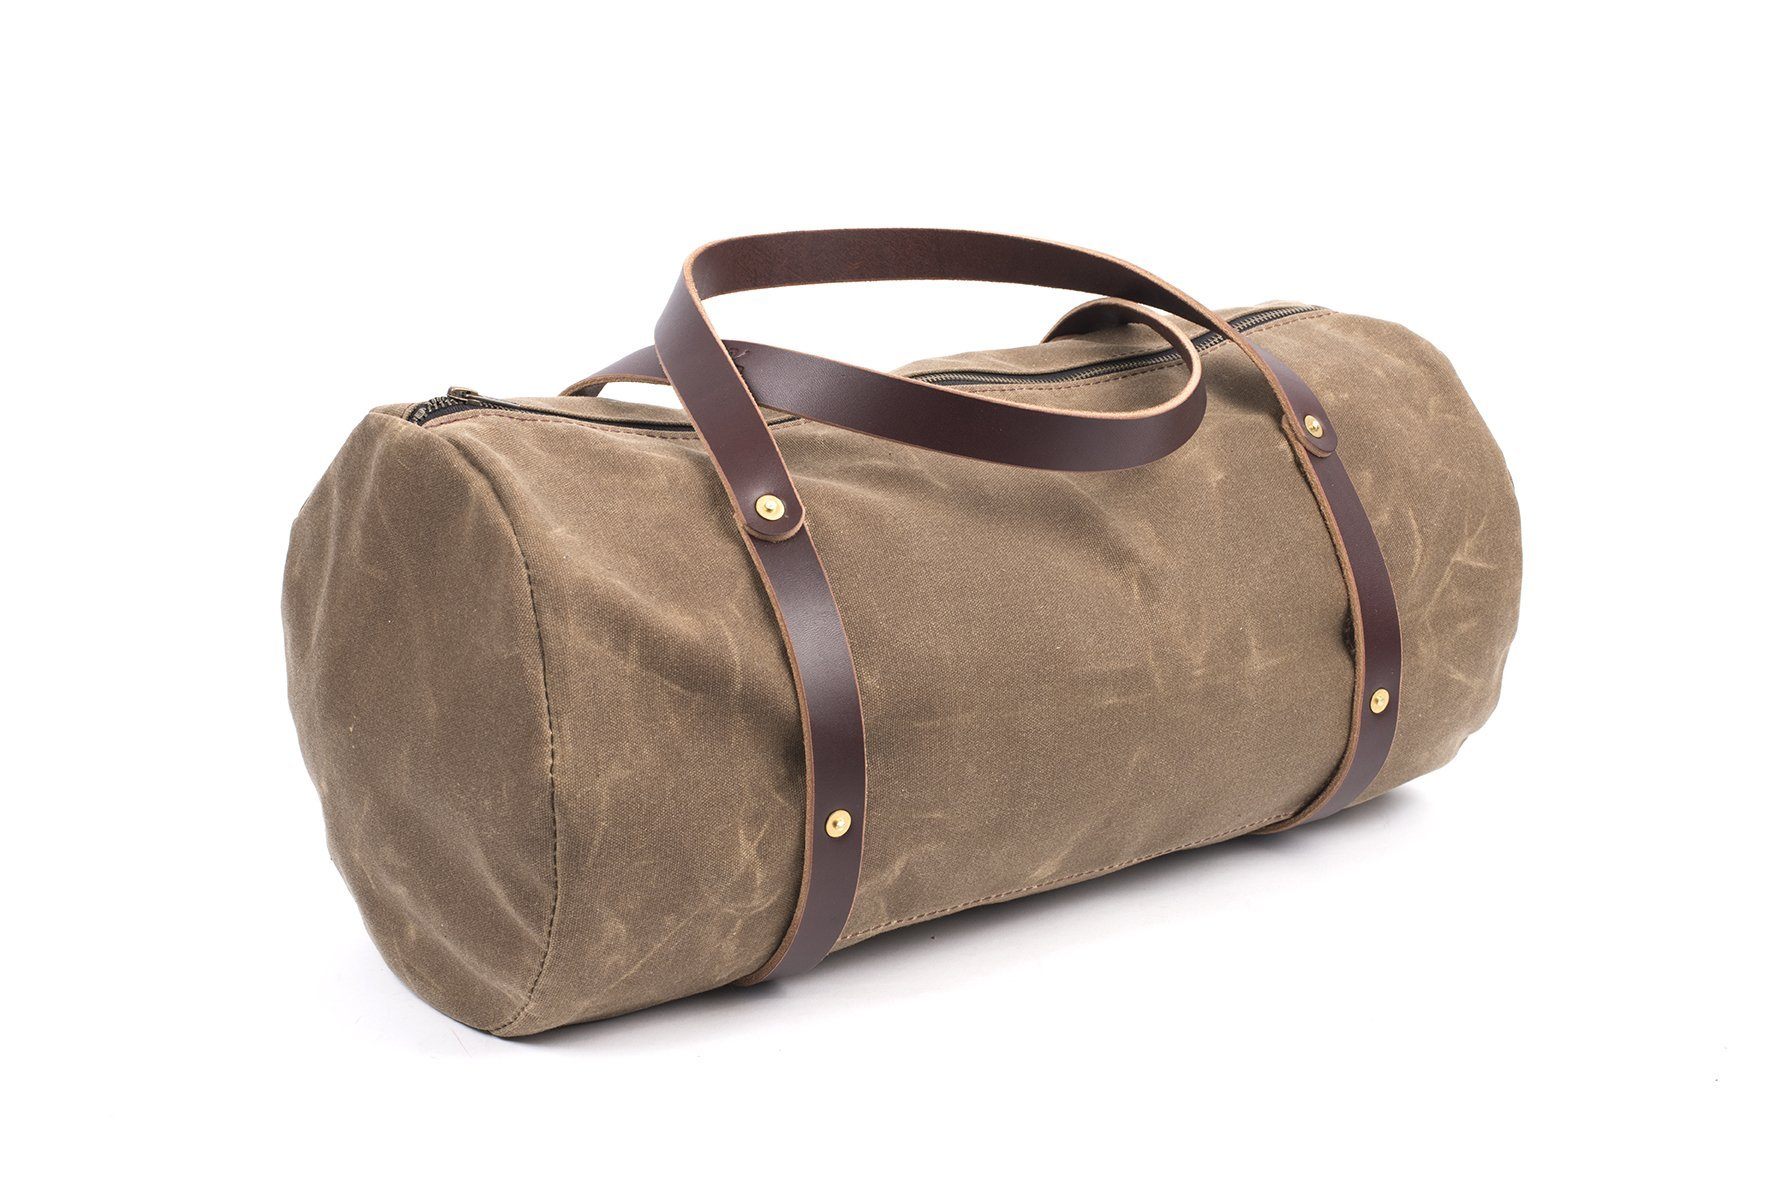 Guy Laroche Duffle Bag  Bags, Genuine leather bags, Duffle bag